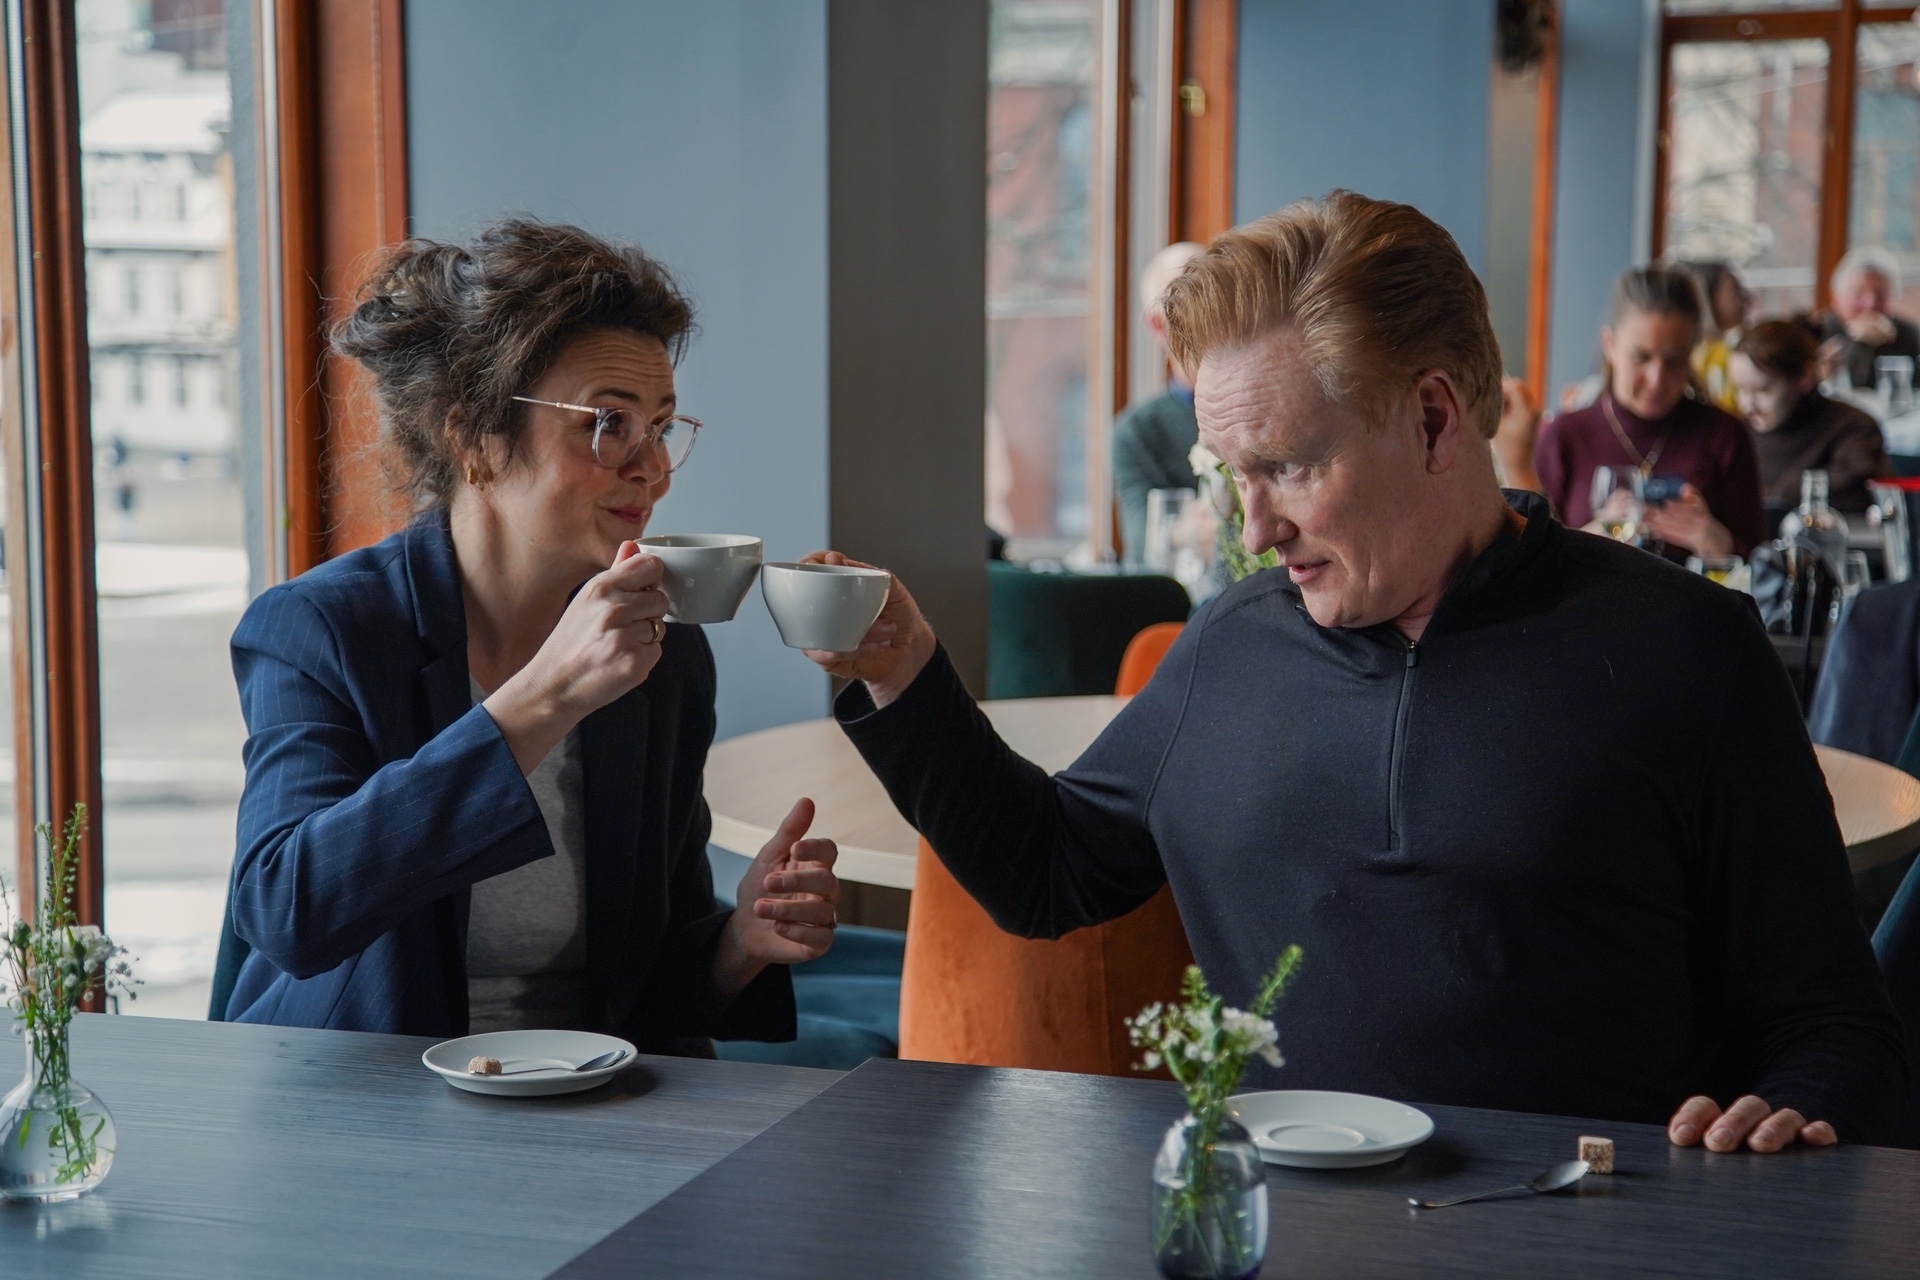 Conan O'Brien meets with a Scandinavian dating expert in Norway